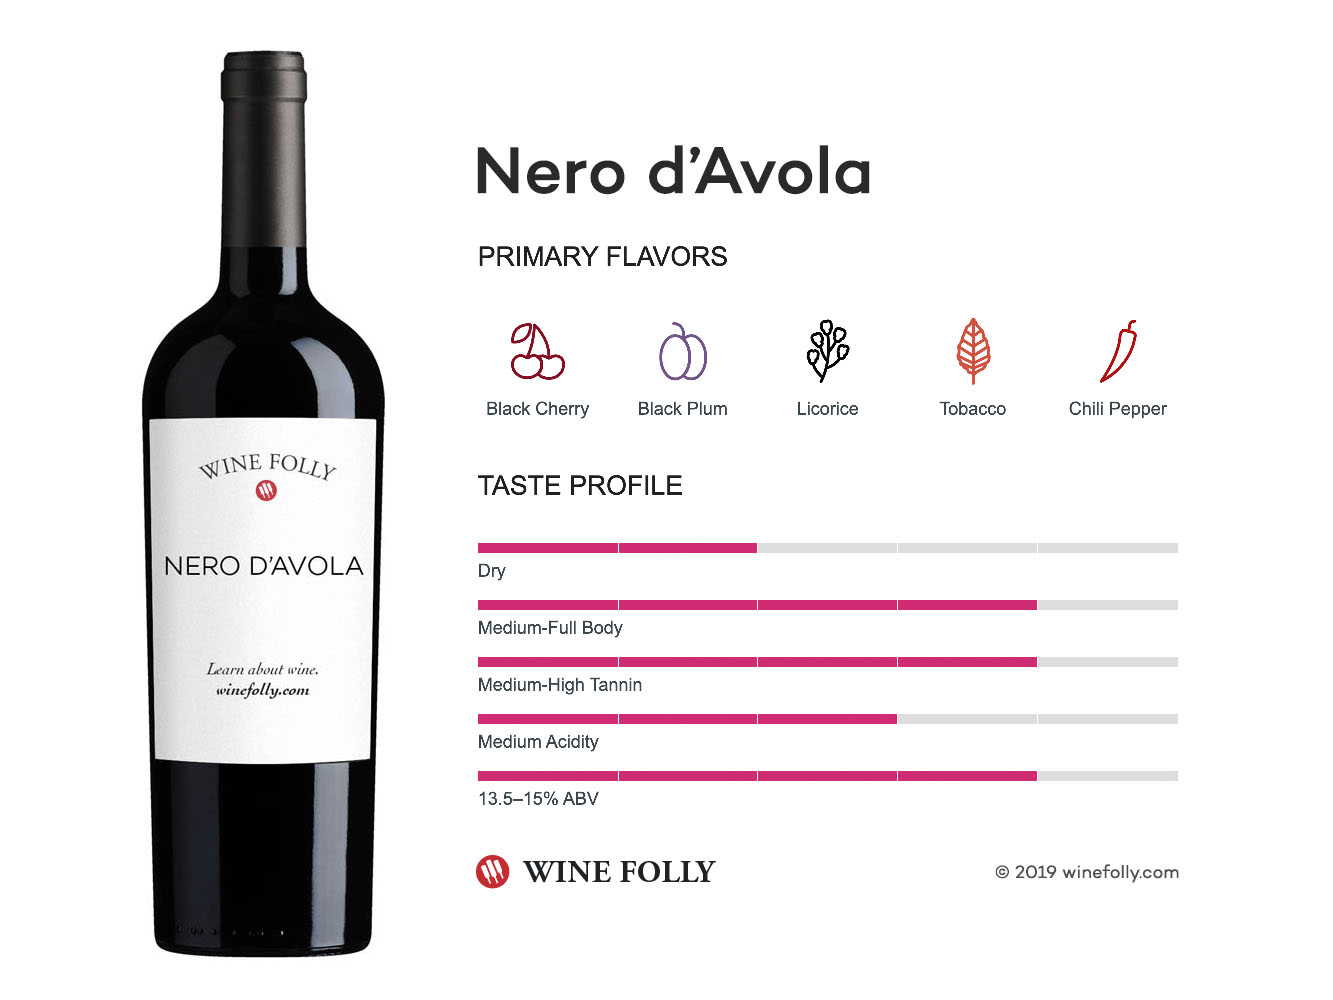 Nero d'Avola wine taste profile - infographic by Wine Folly